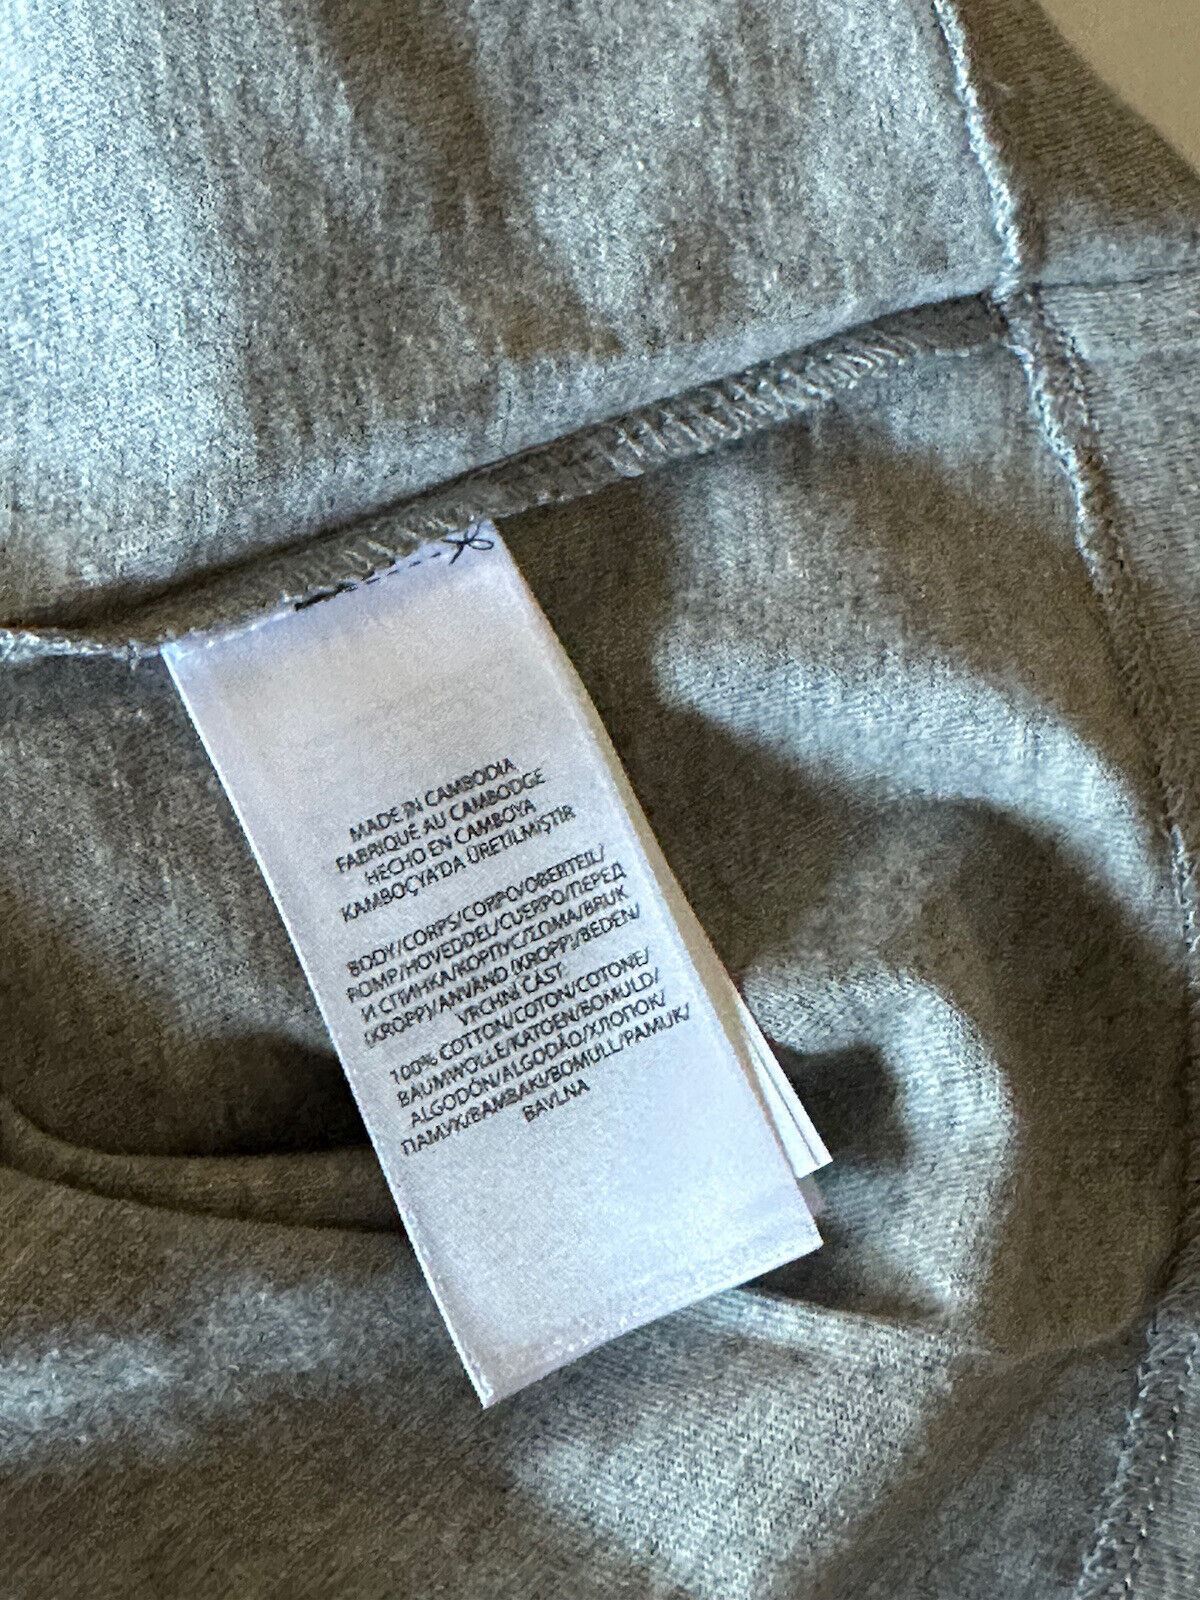 NWT $79.50 Polo Ralph Lauren Long Sleeve Bear T-Shirt Grey Medium